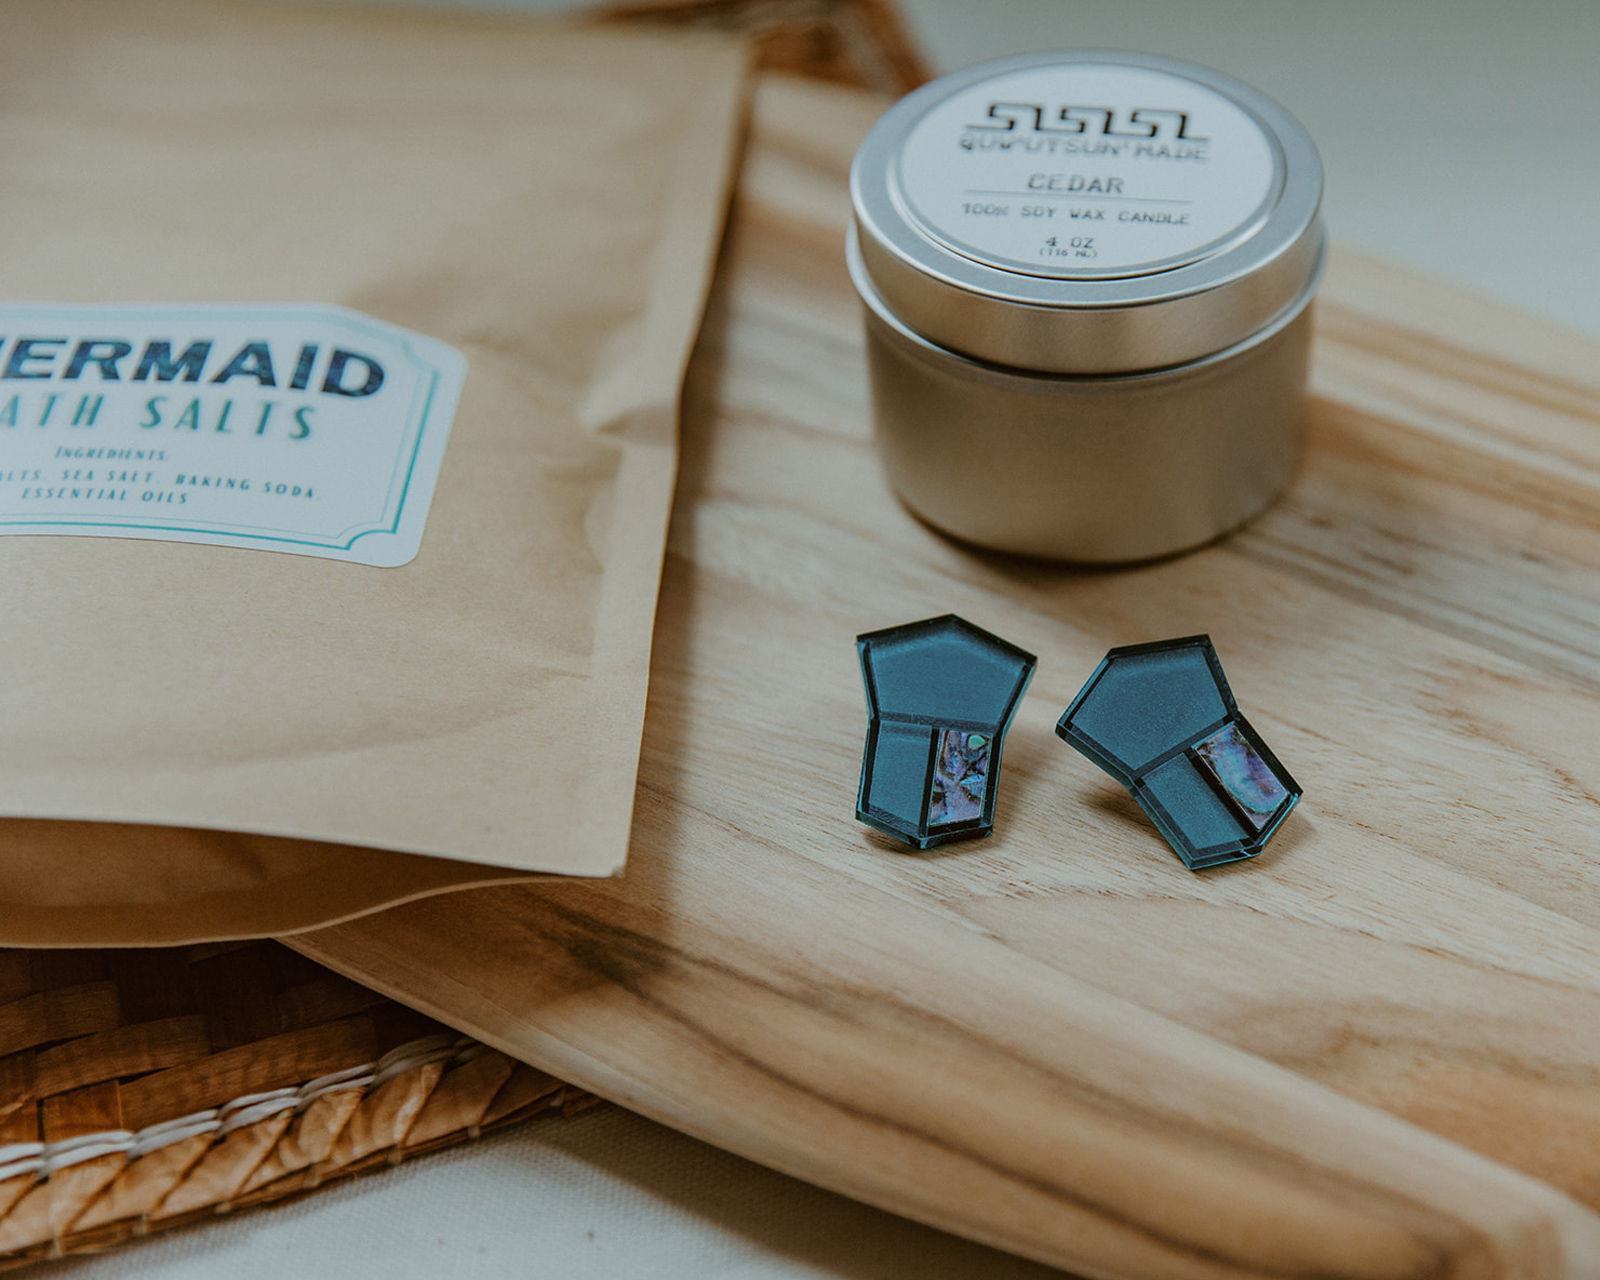 A cedar wax candle, manila bag of bath salts, and geometric blue and abalone post earrings